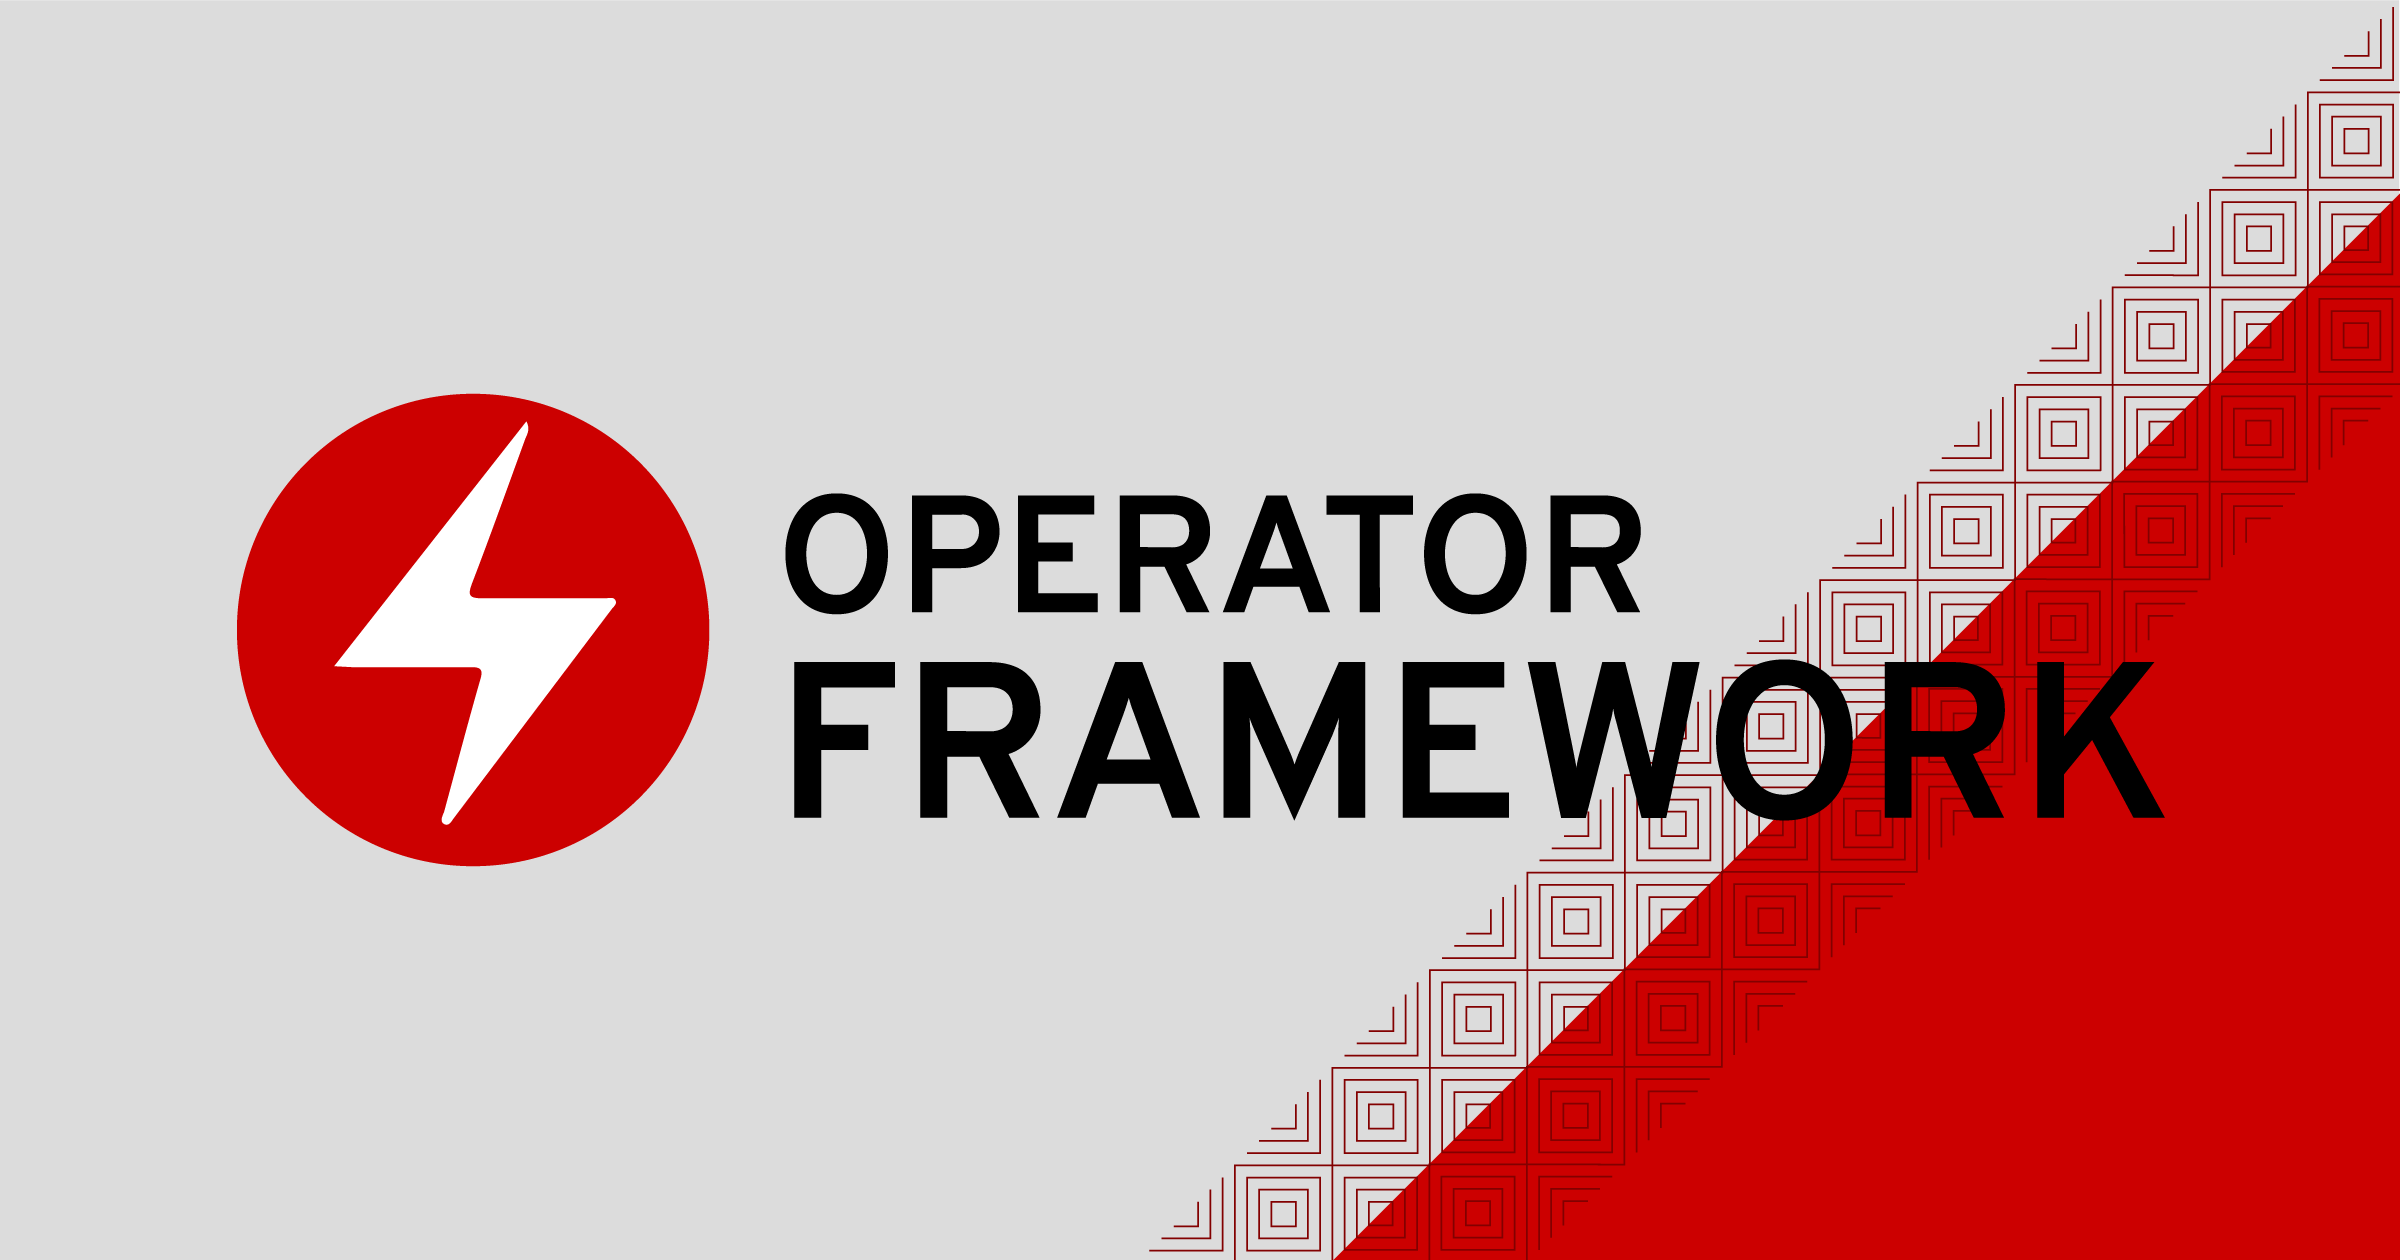 Introducing the Operator Framework